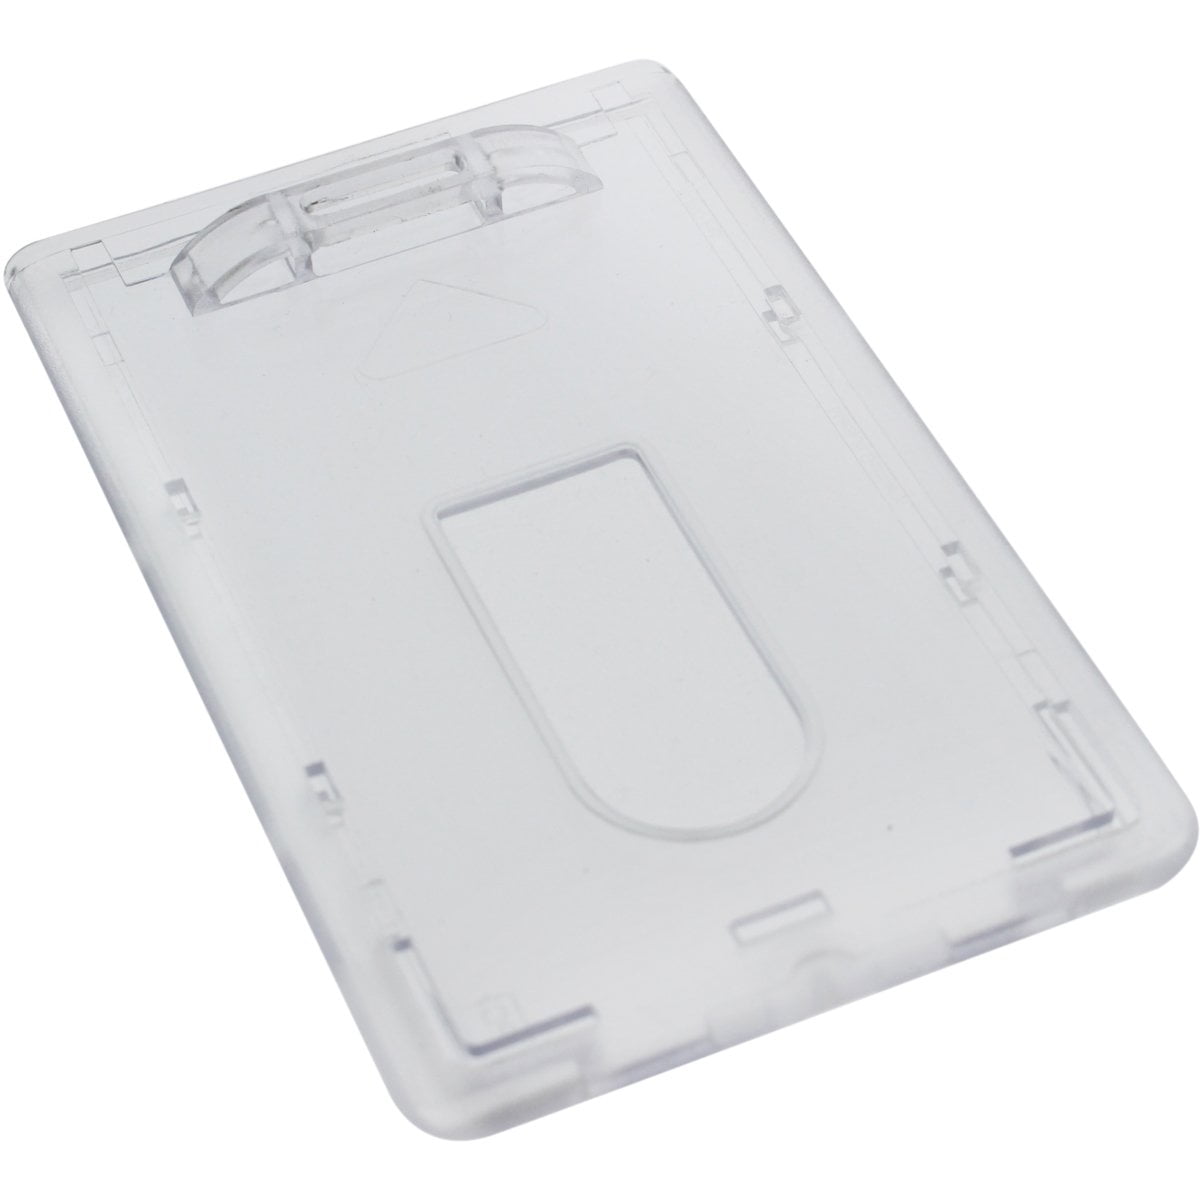 10pcs Vertical ID Card Holder Clear Plastic Badge Resealable Waterproof Bag 6L